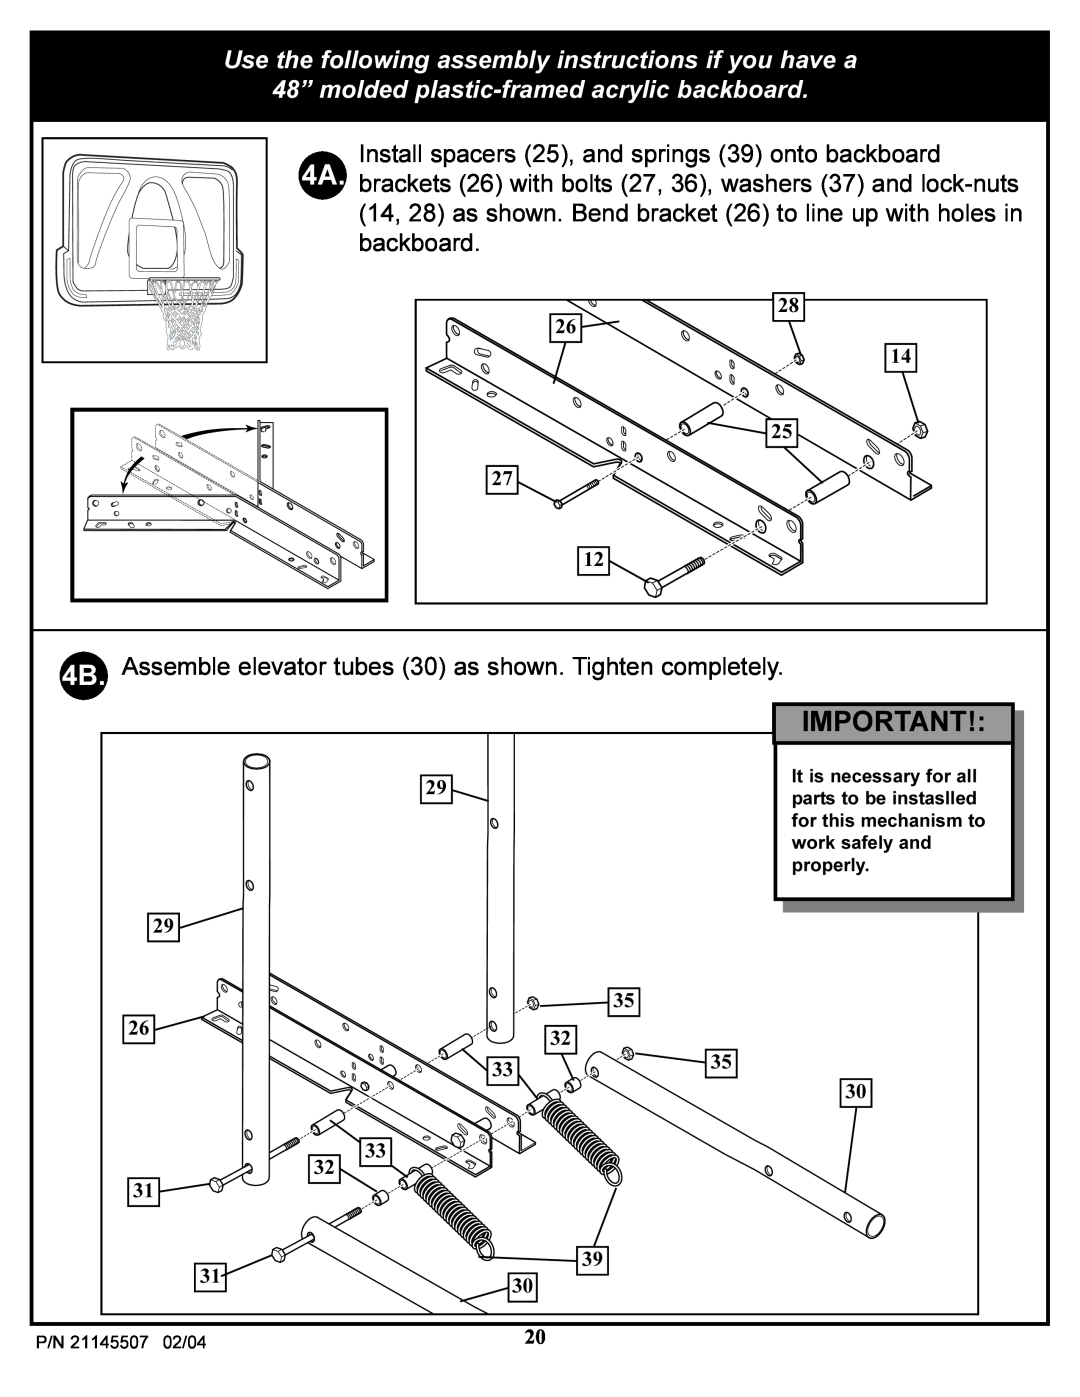 Huffy Sports Basketball Systems manual 48” molded plastic-framed acrylic backboard 